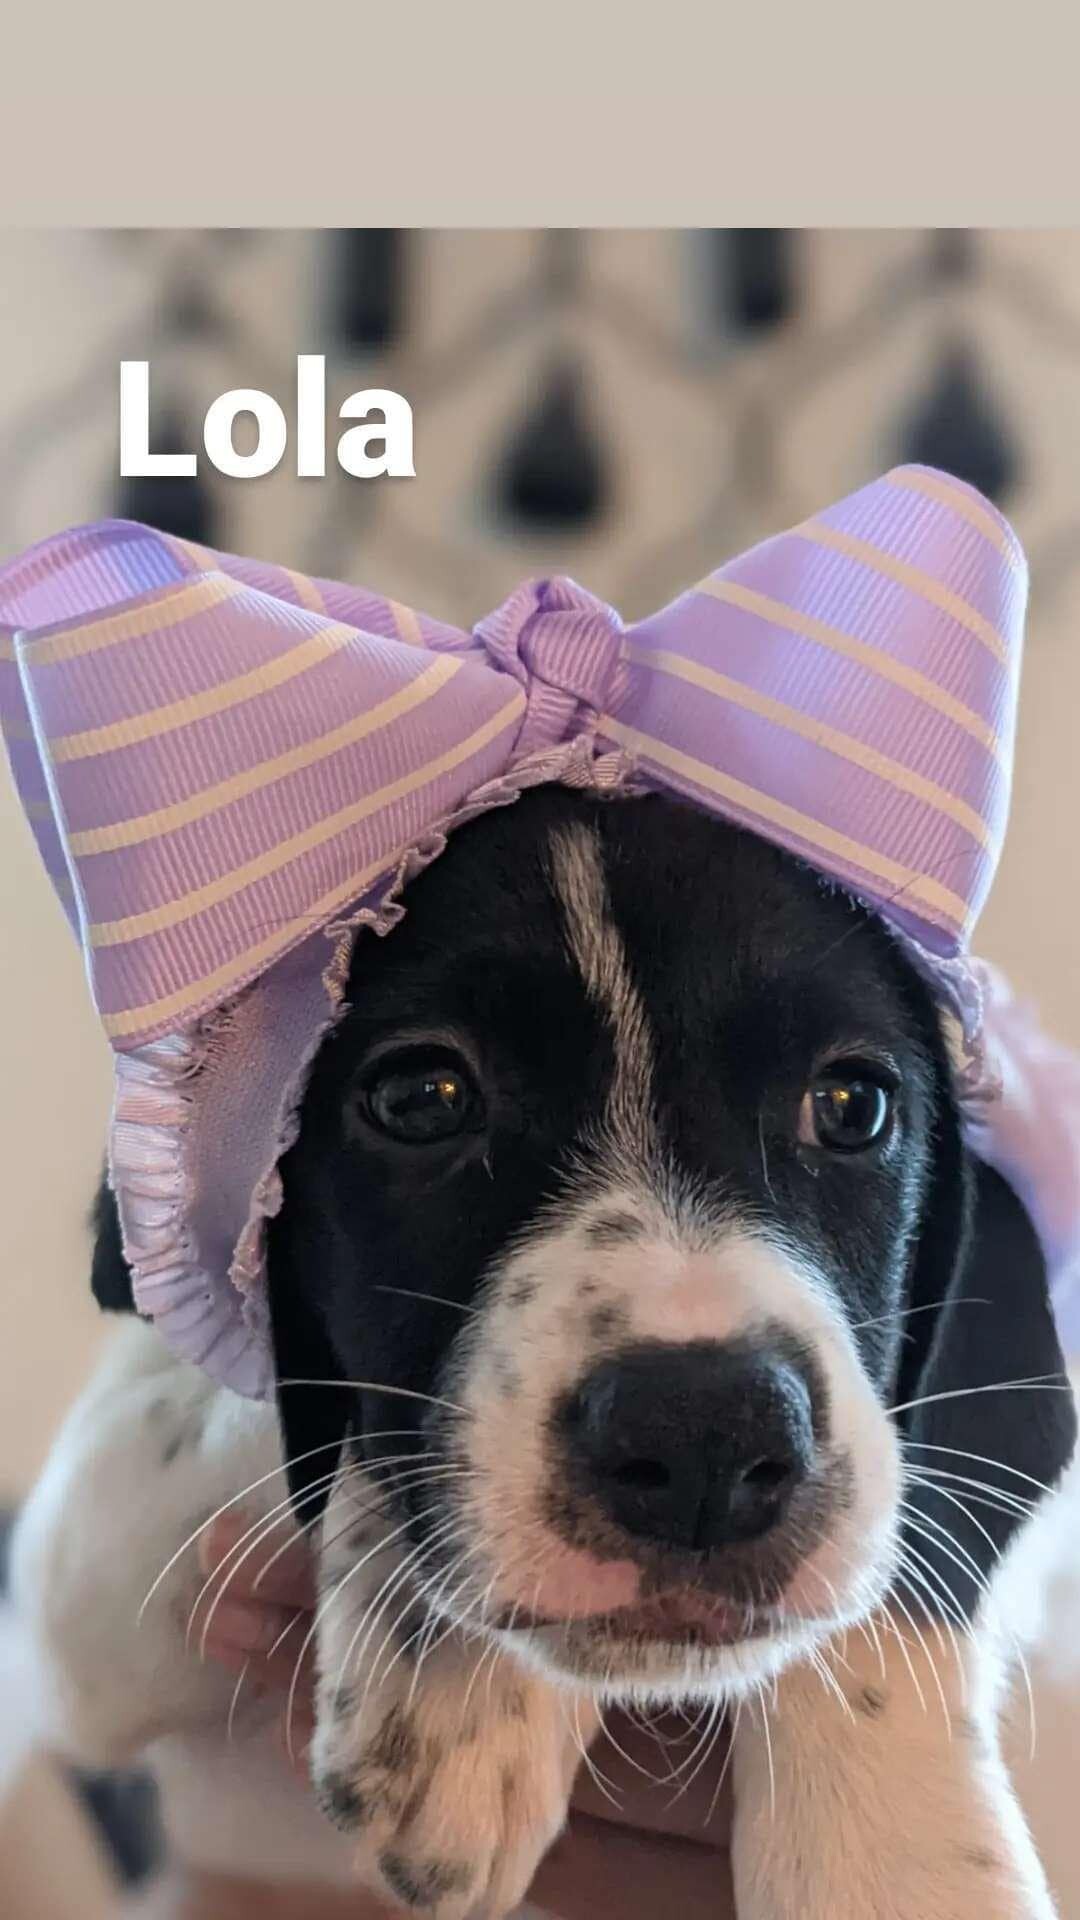 Lola detail page